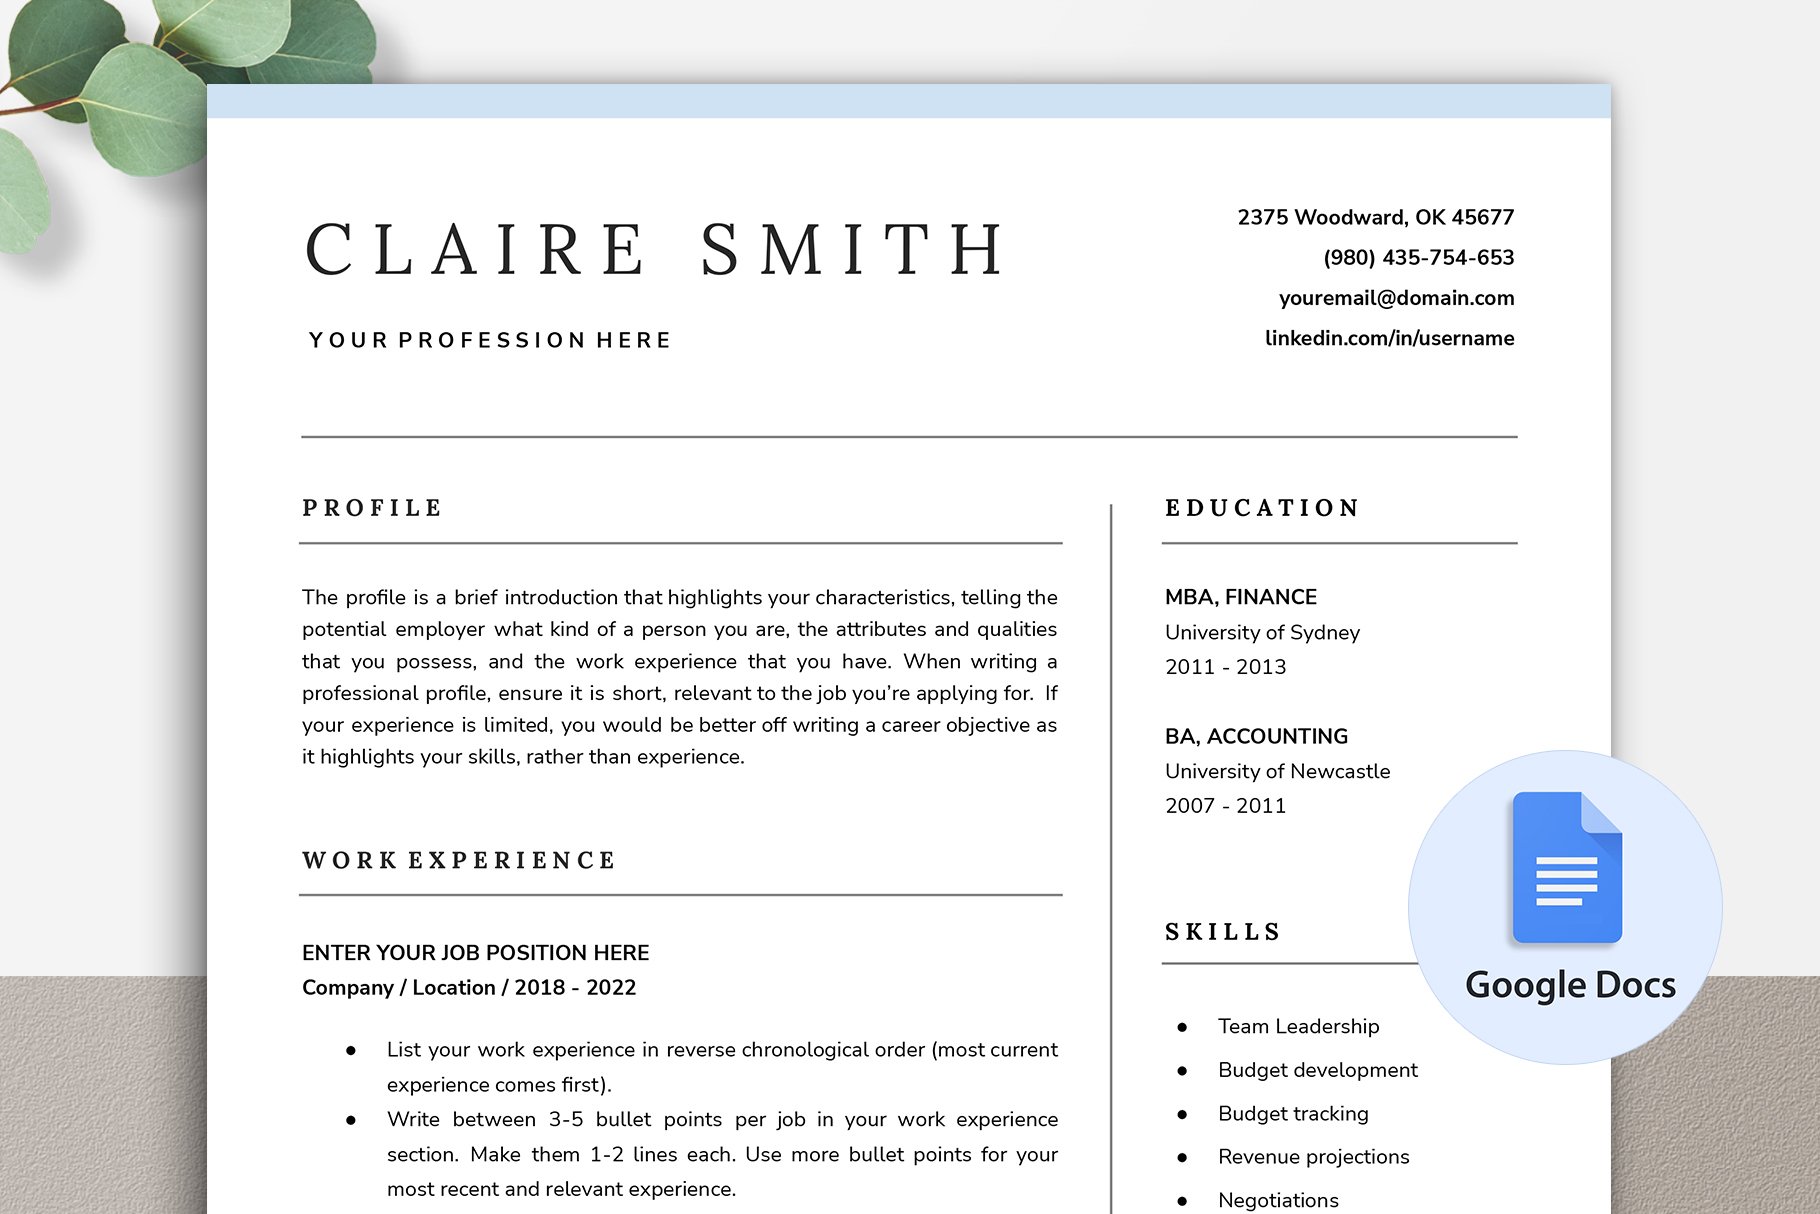 Google Docs Resume CV Template 04 cover image.